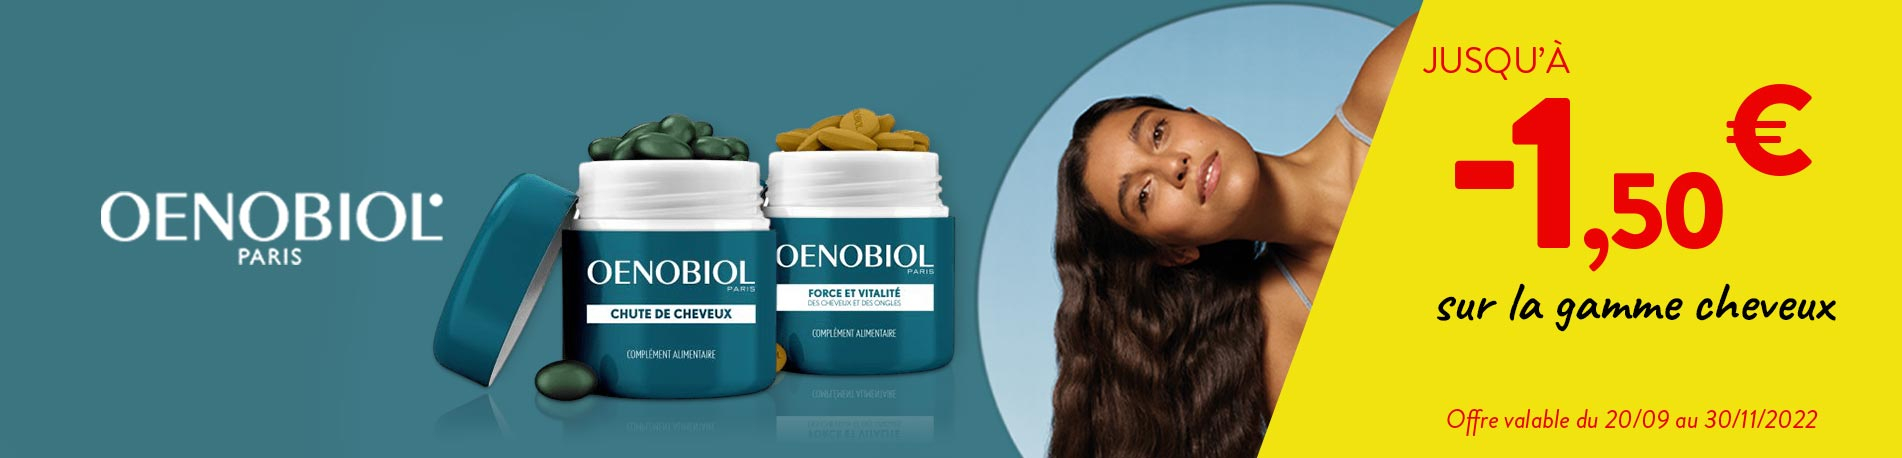 Promotion Oenobiol cheveux